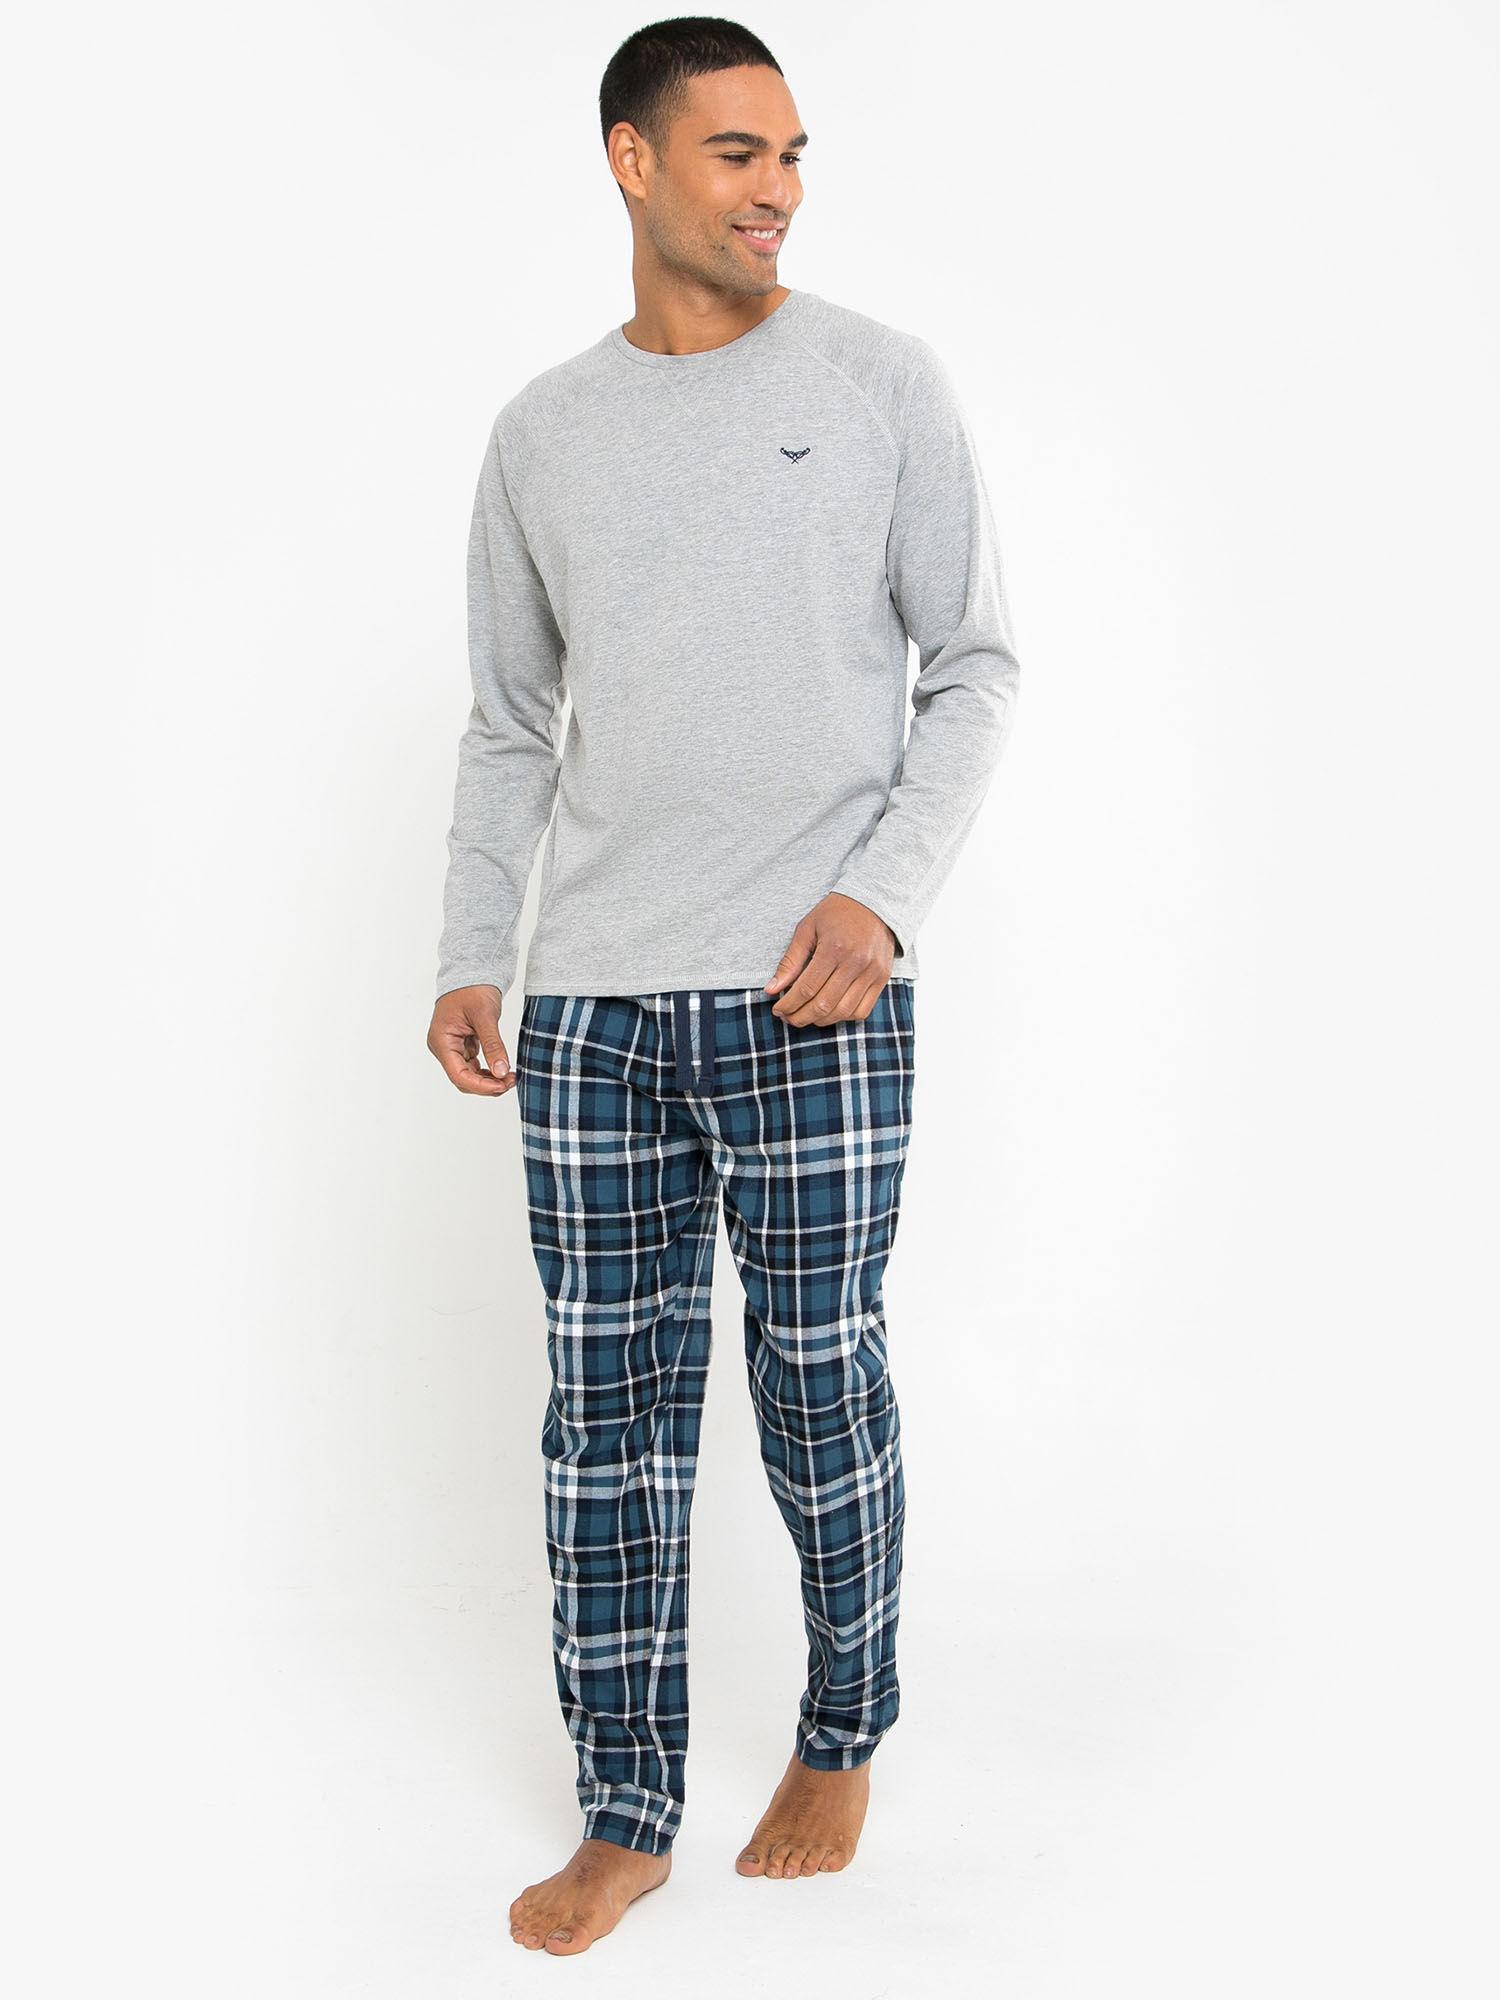 grey & blue check pyjama & sweatshirt (set of 2)